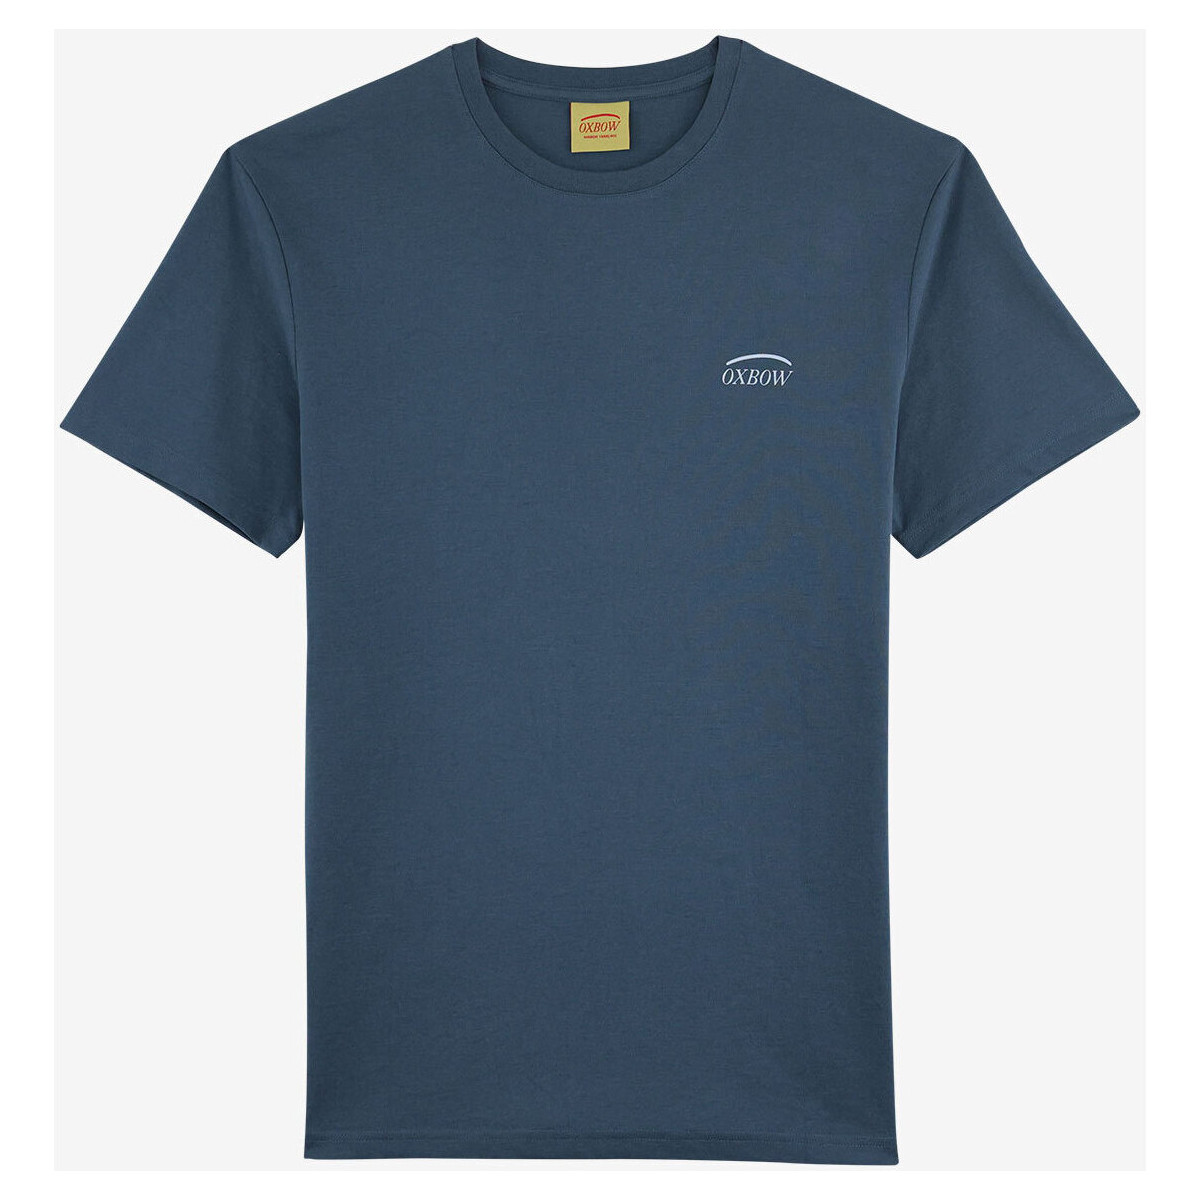 Vêtements Homme aviator bomber jacket item Tee-shirt manches courtes imprimé P2TARLING Bleu